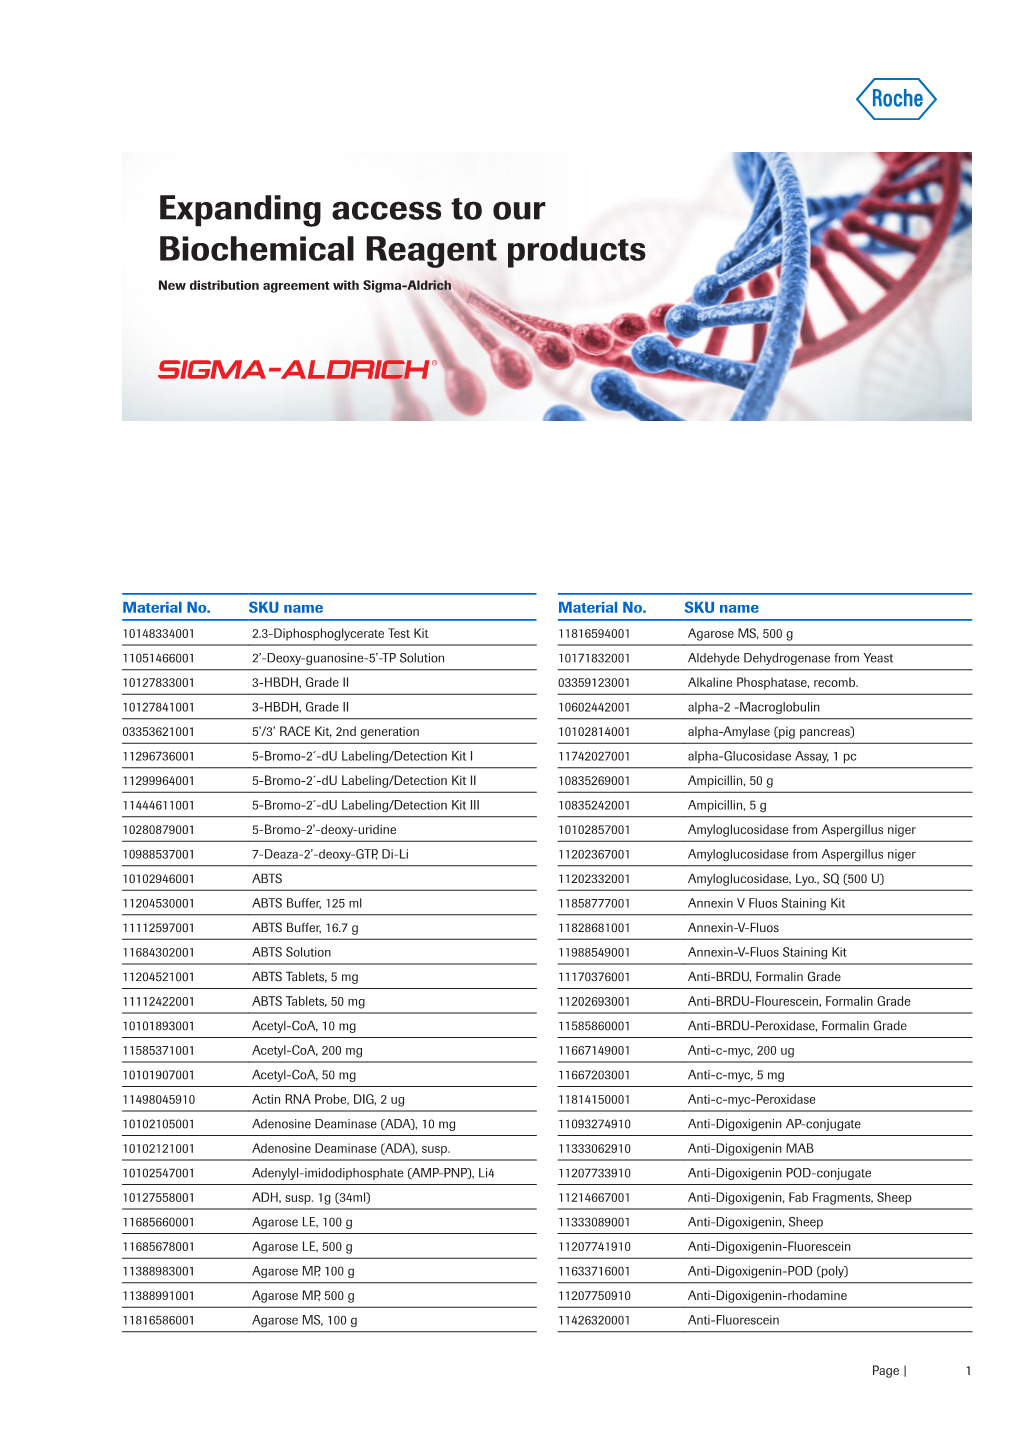 Sigma-Aldrich Biochemical Reagents